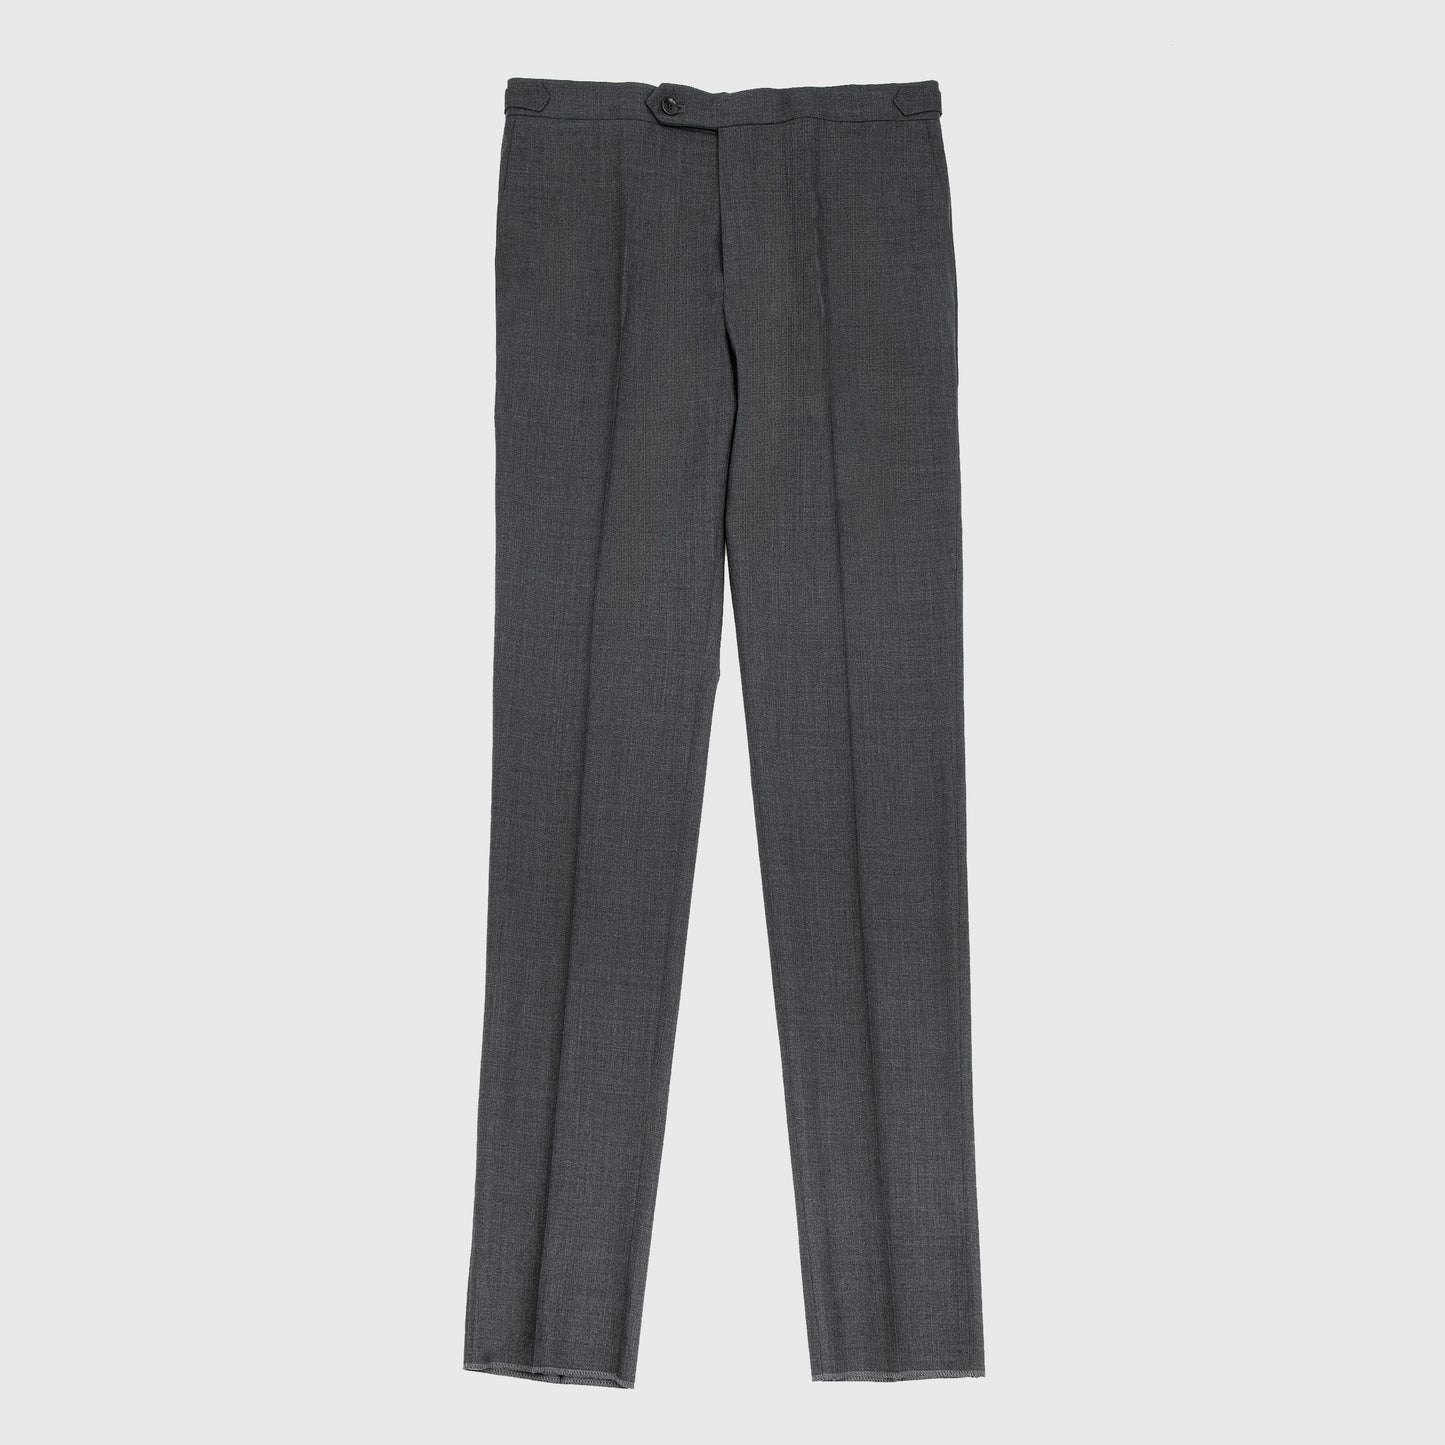 Medium Rise Slim Fit 120´s Wool Trouser with Side Adjusters Dark Grey